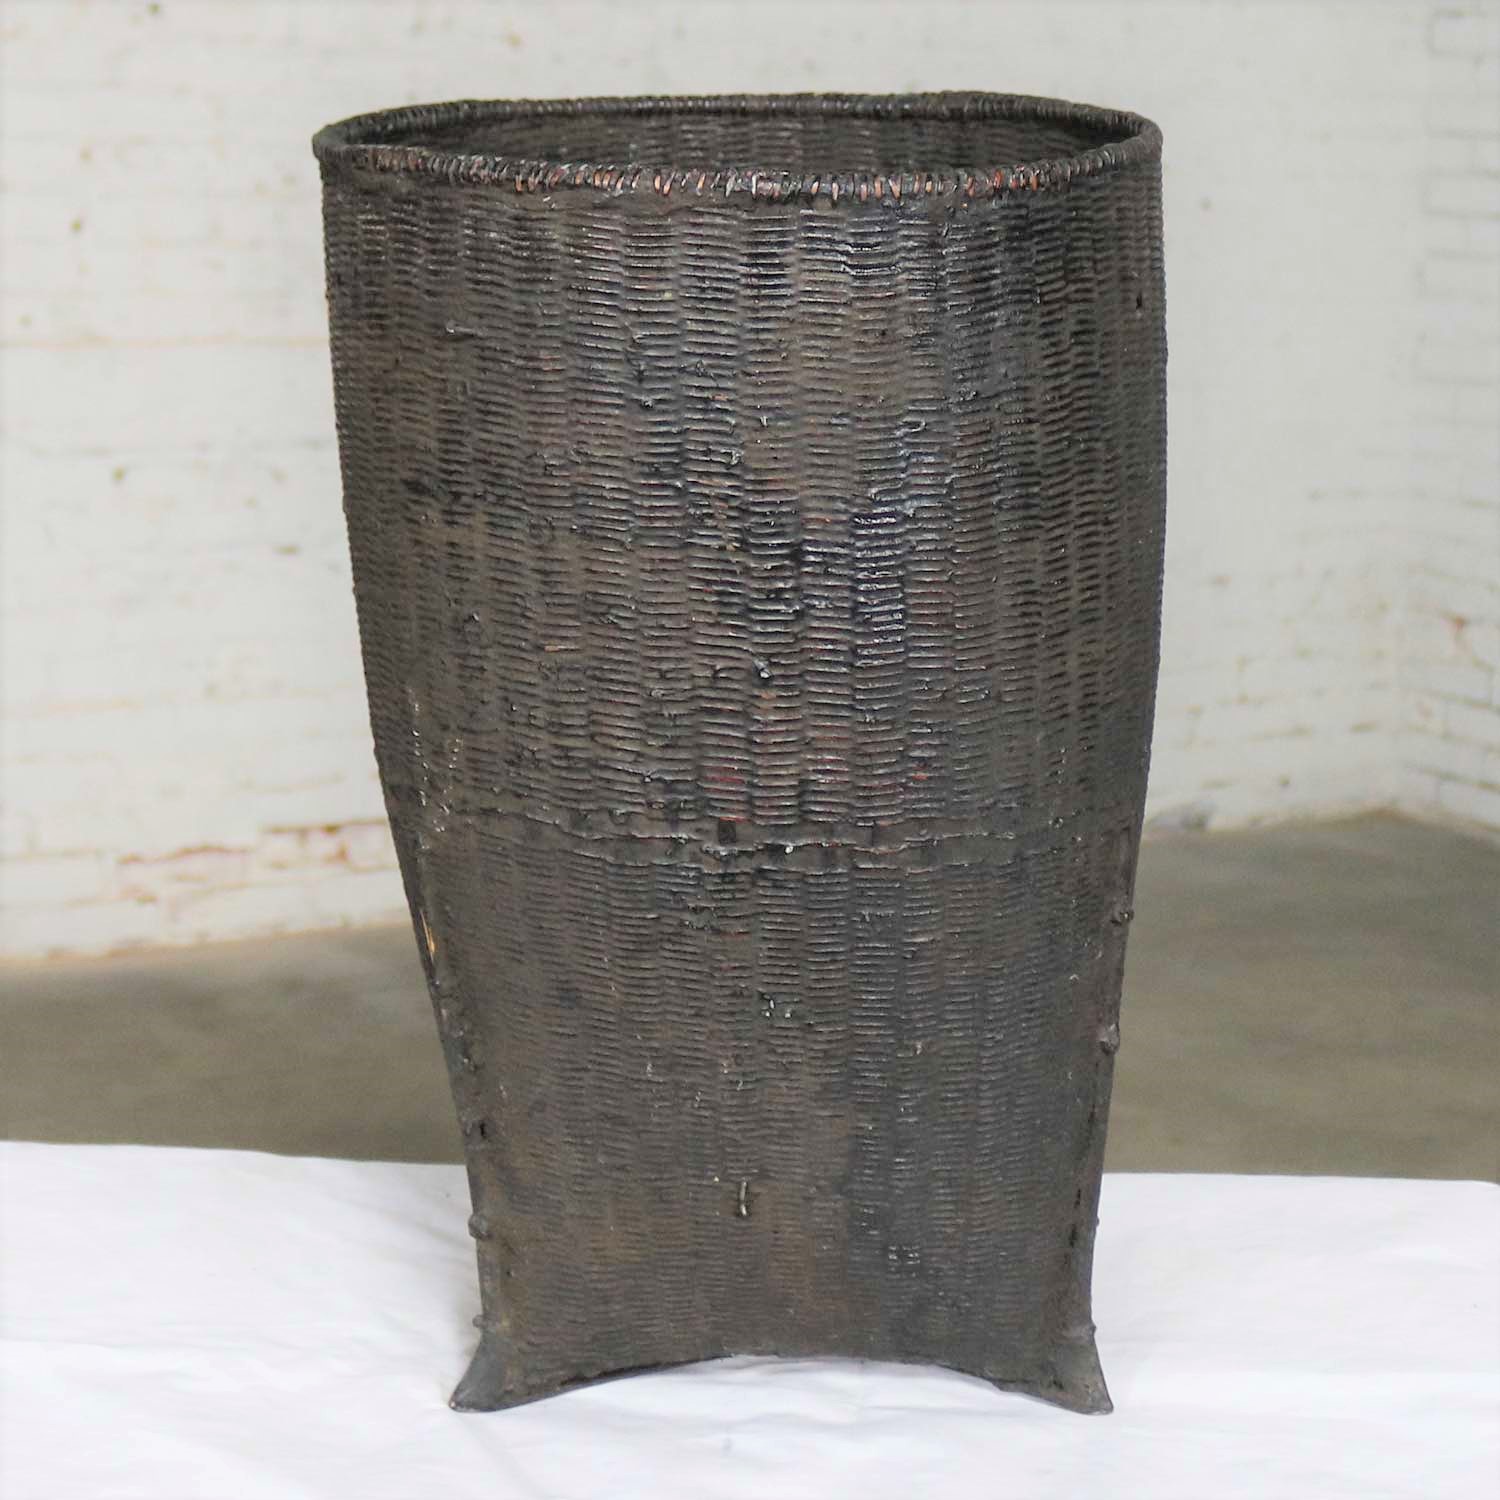 Vintage Tribal Storage Basket of Bamboo Rattan and Wood in Karen of Burma Style